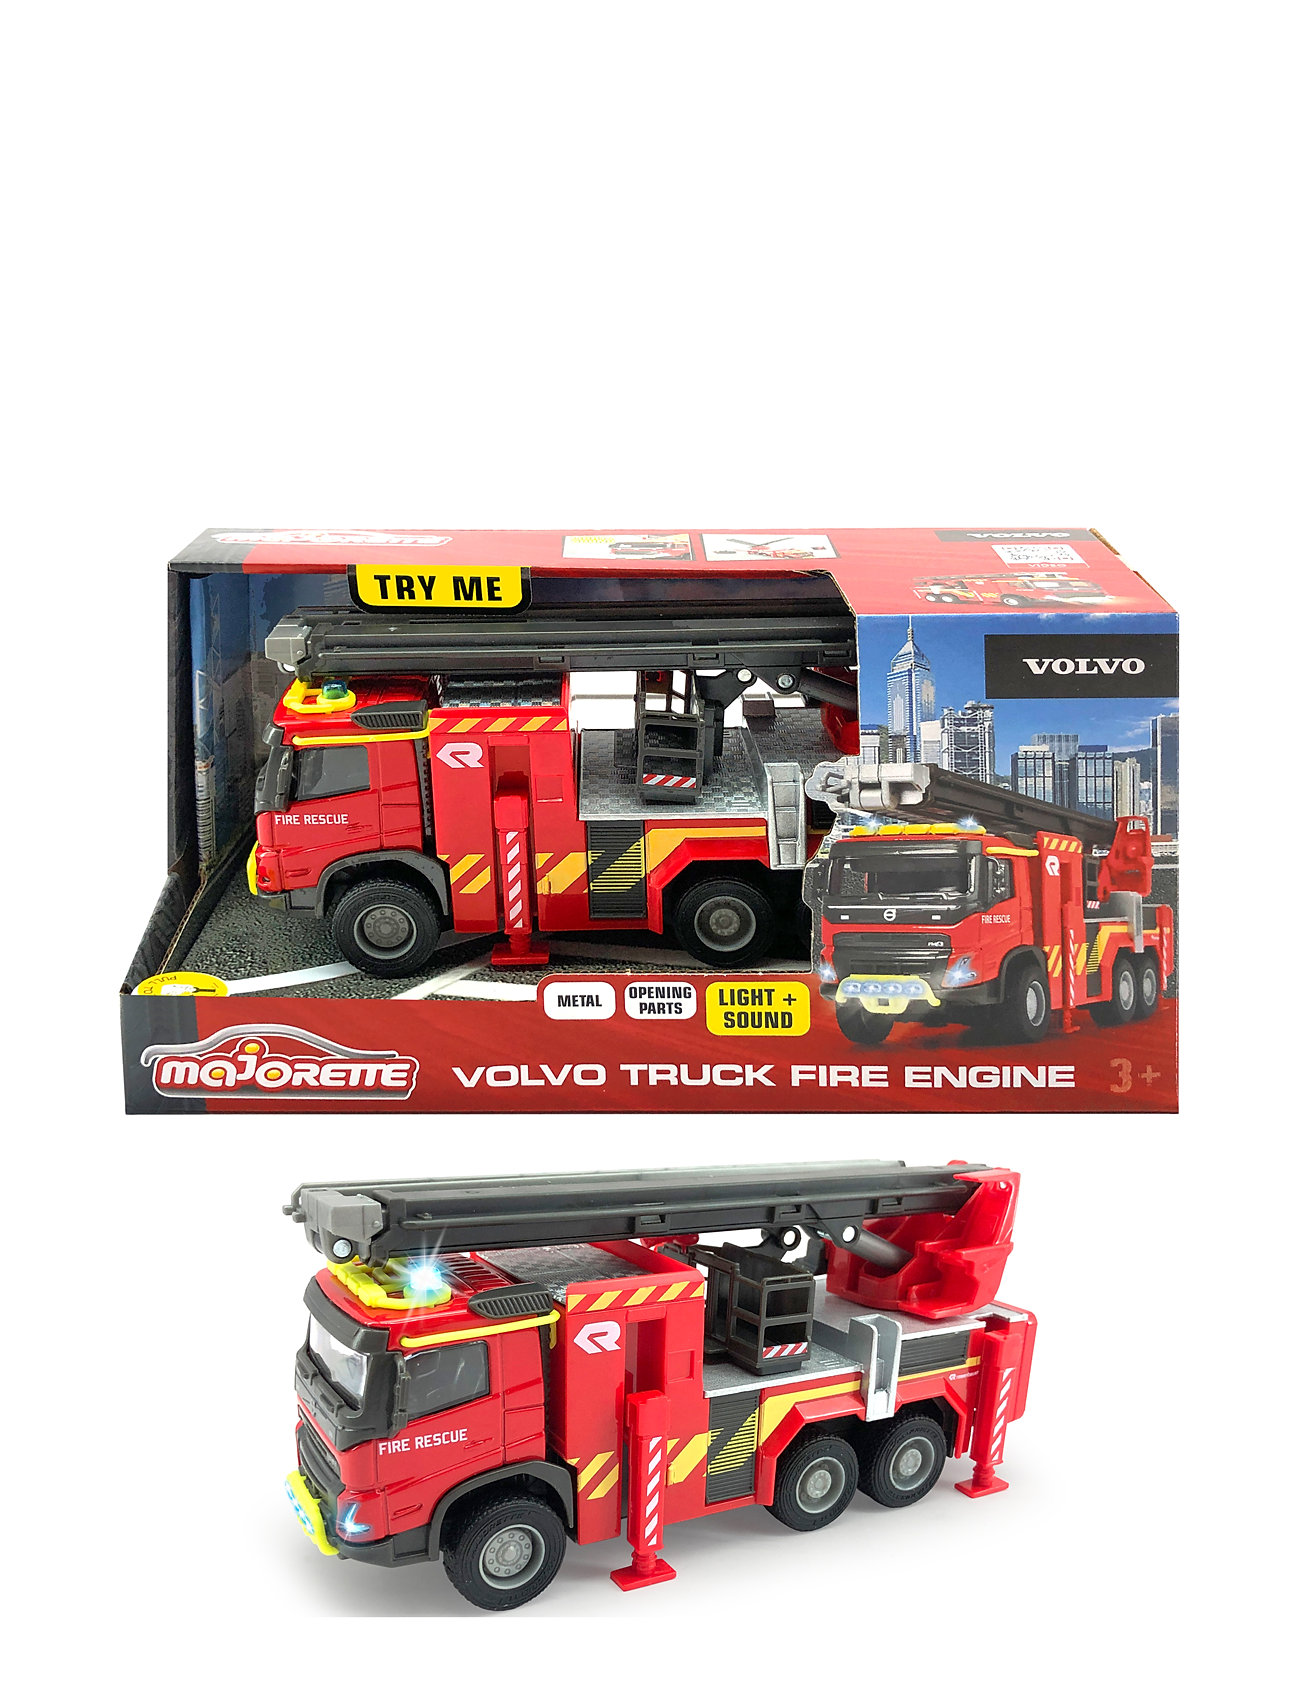 Majorette "Majorette Grad Series Volvo Truck Fire Engine Toys Toy Cars & Vehicles Trucks Multi/patterned Majorette"